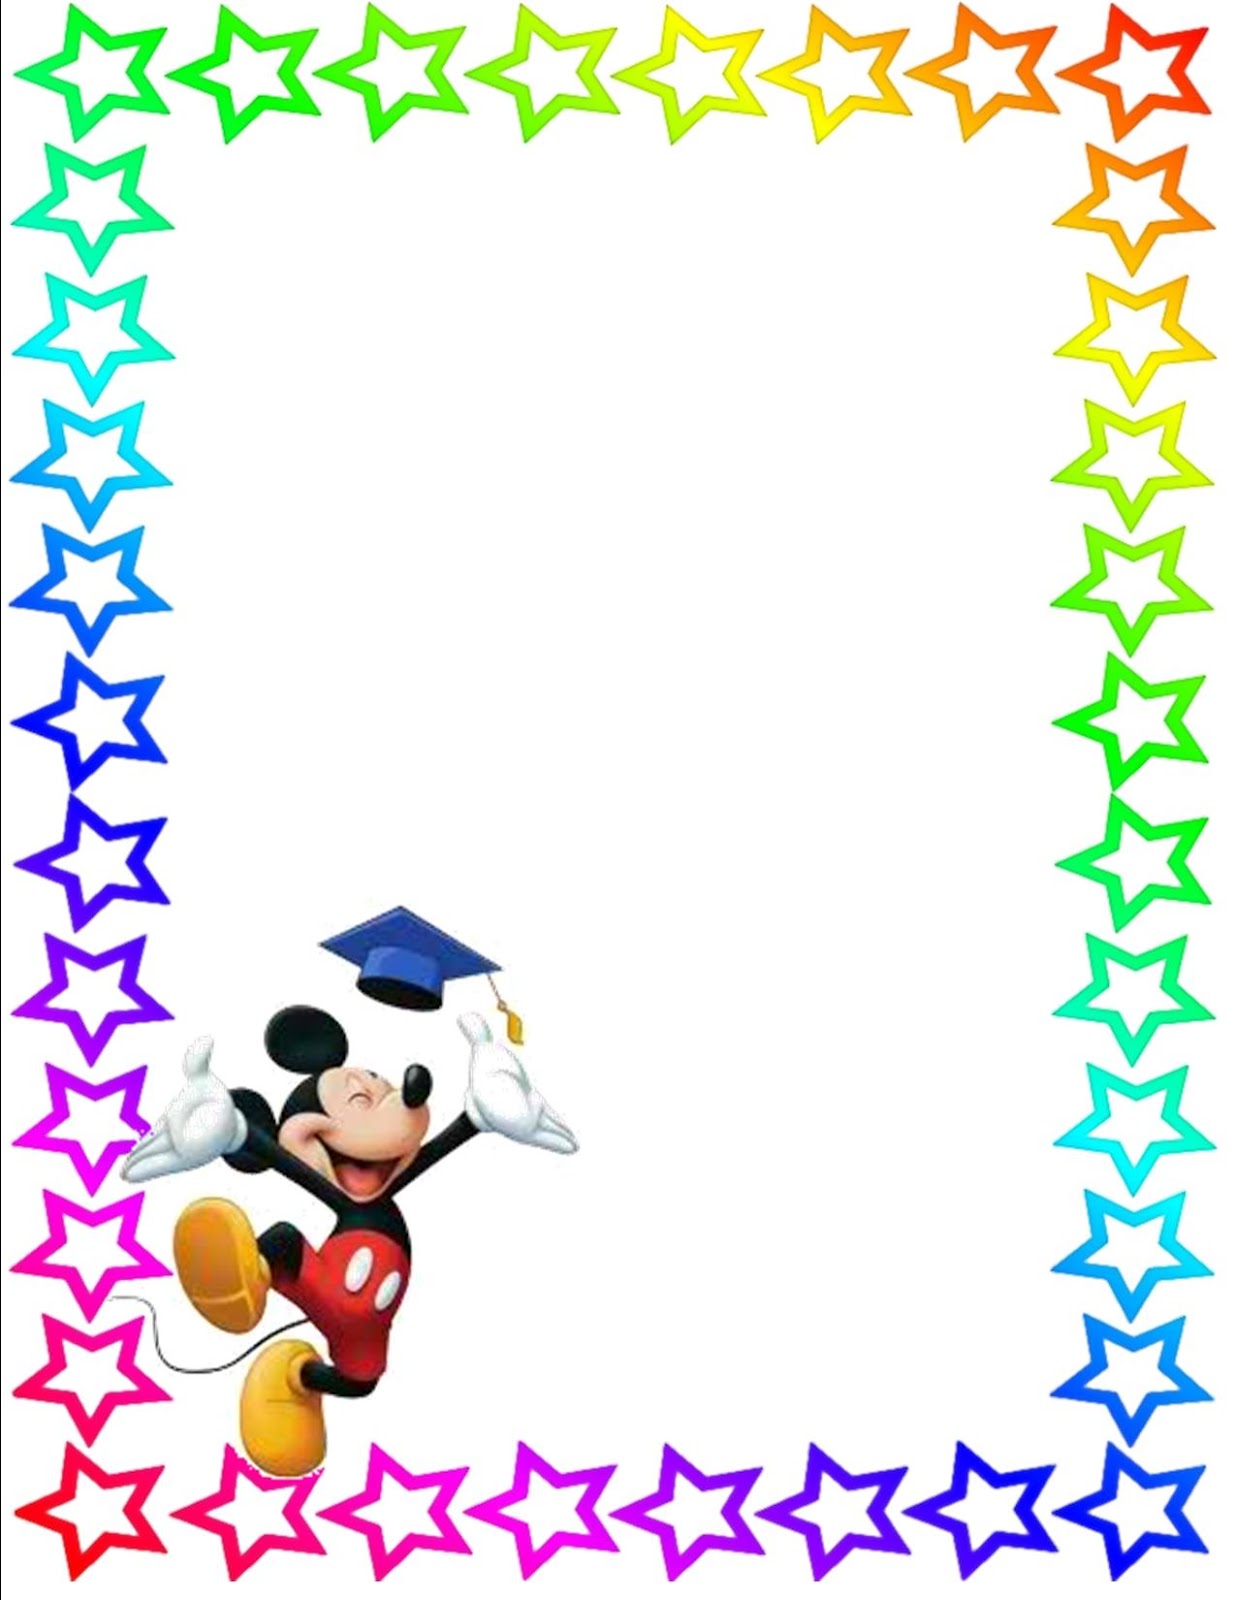 Mickey Mouse Wallpaper And Border - Disney Border - HD Wallpaper 